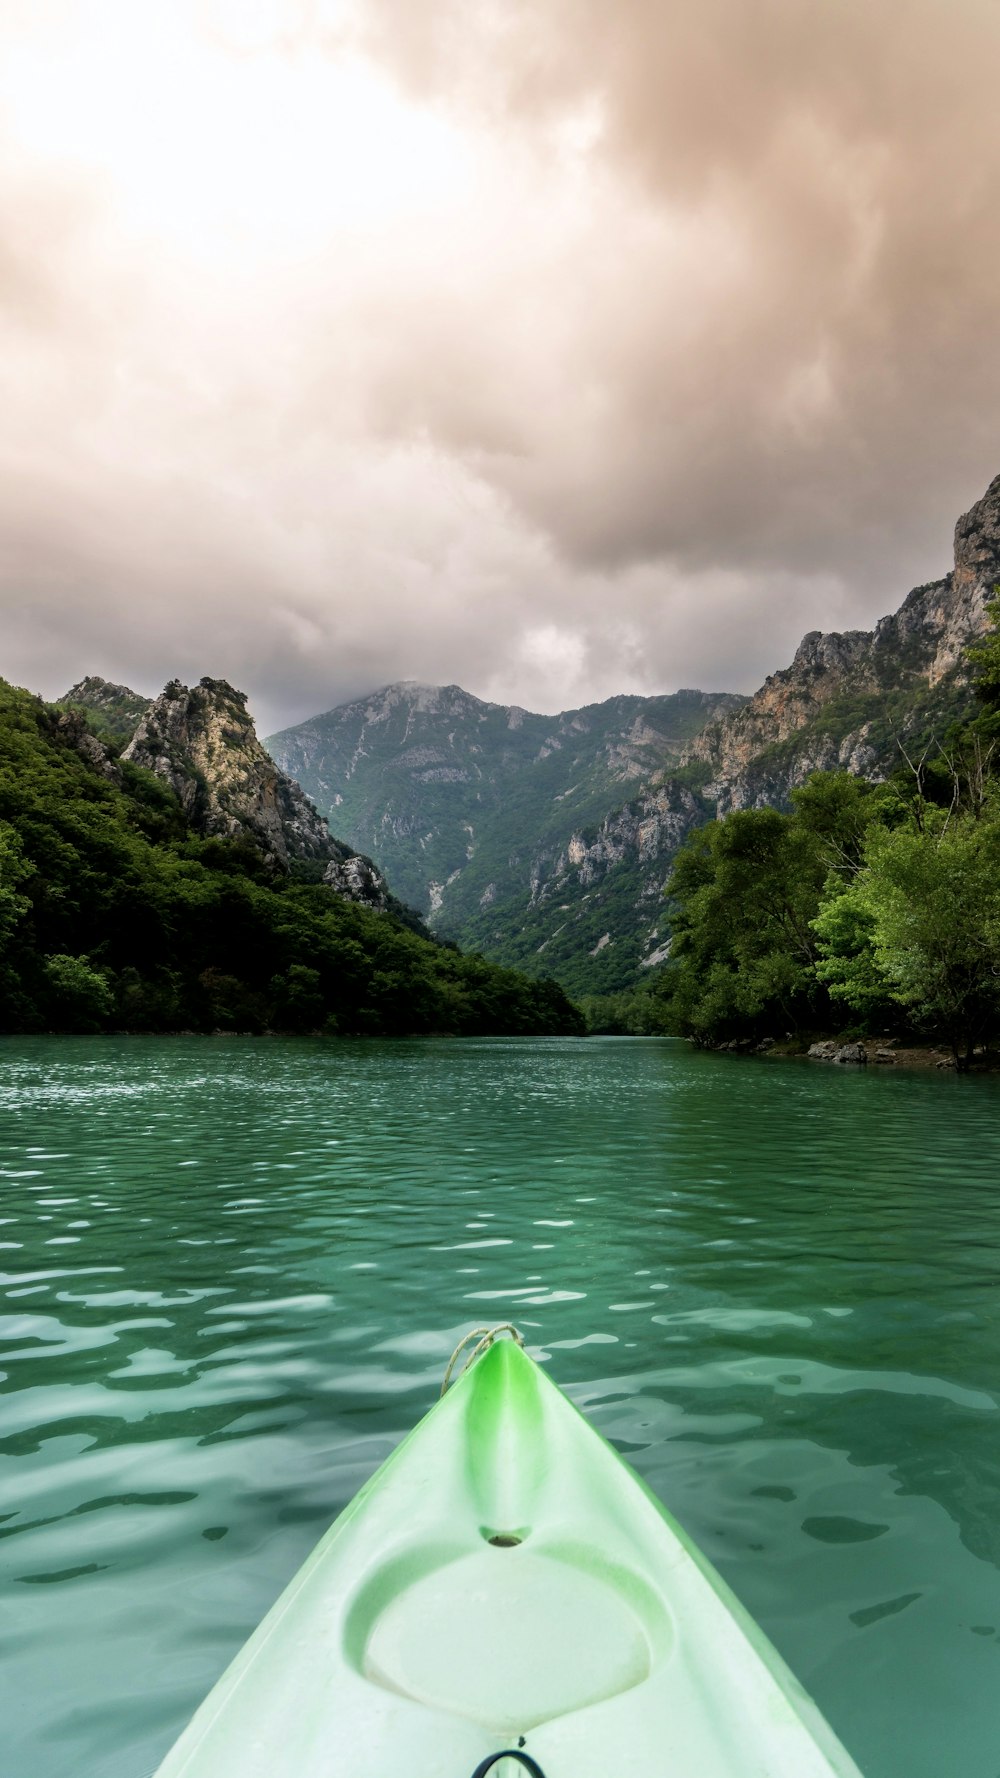 green kayak sailing near grass covered mountains during daytime